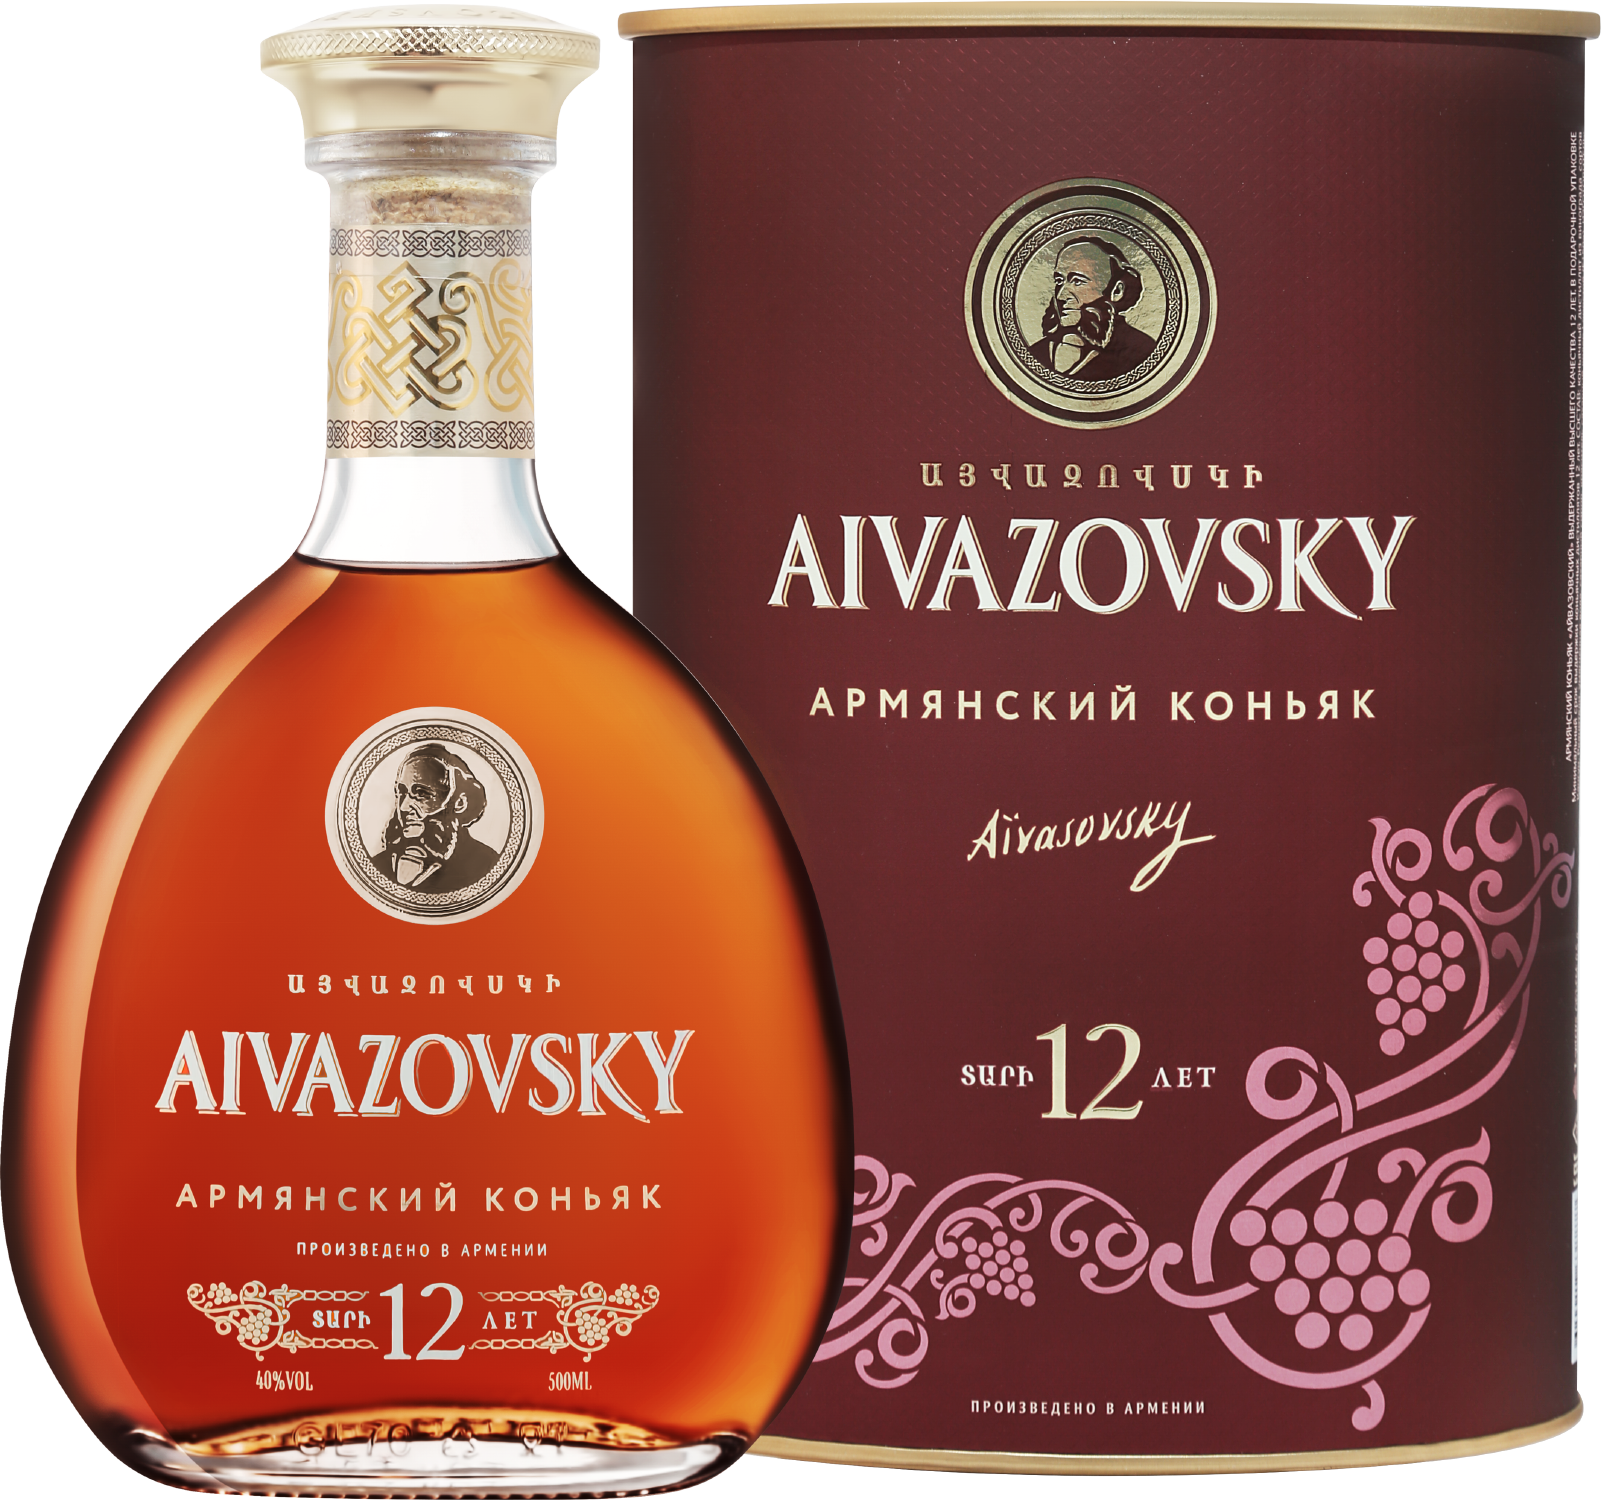 Aivazovsky Old Armenian Brandy 12 Y.O. (gift box)